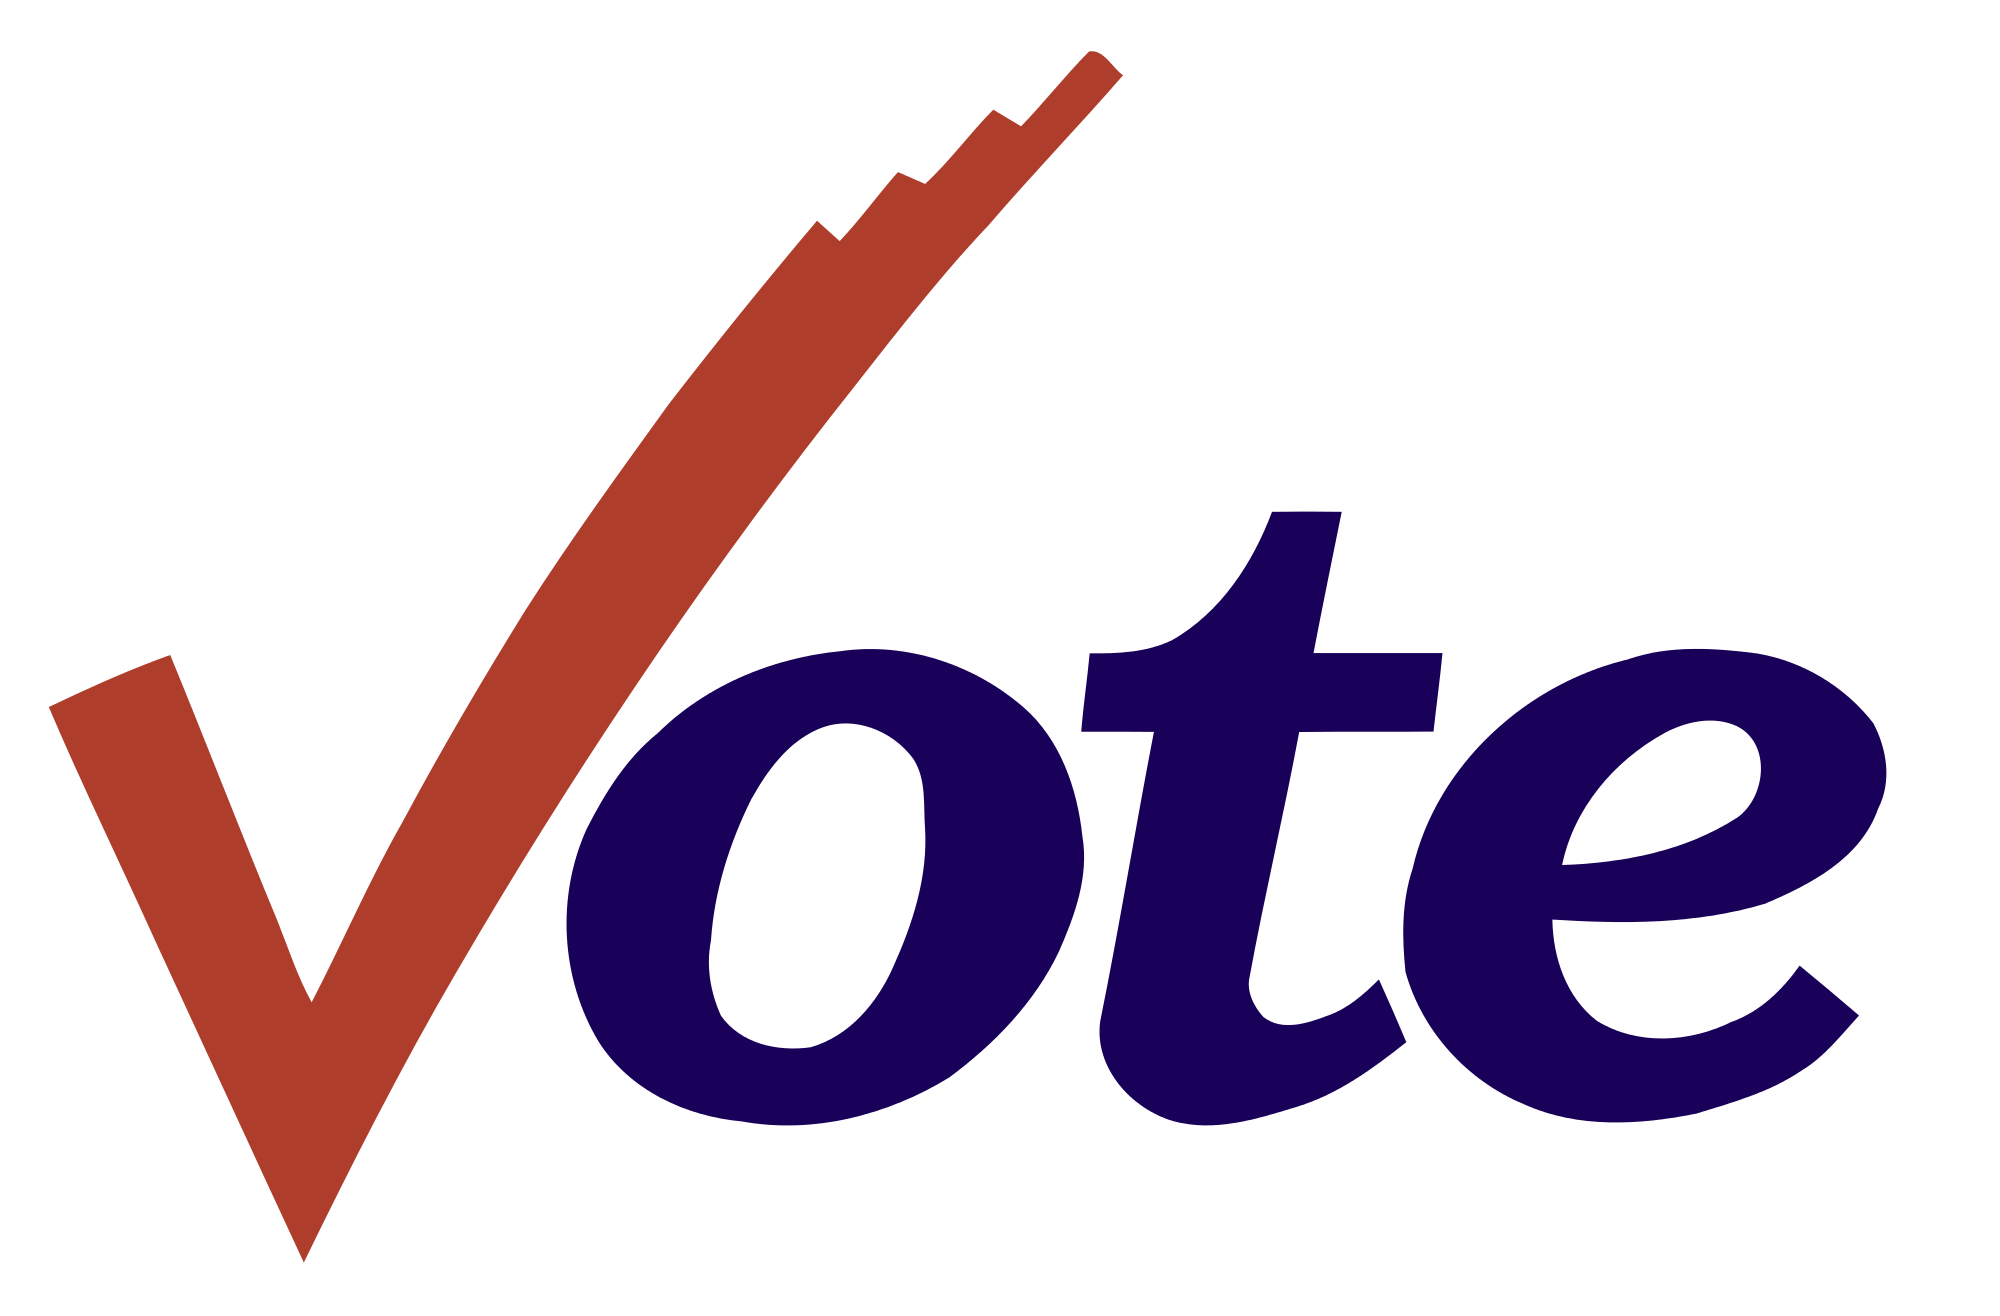 voting clipart vector